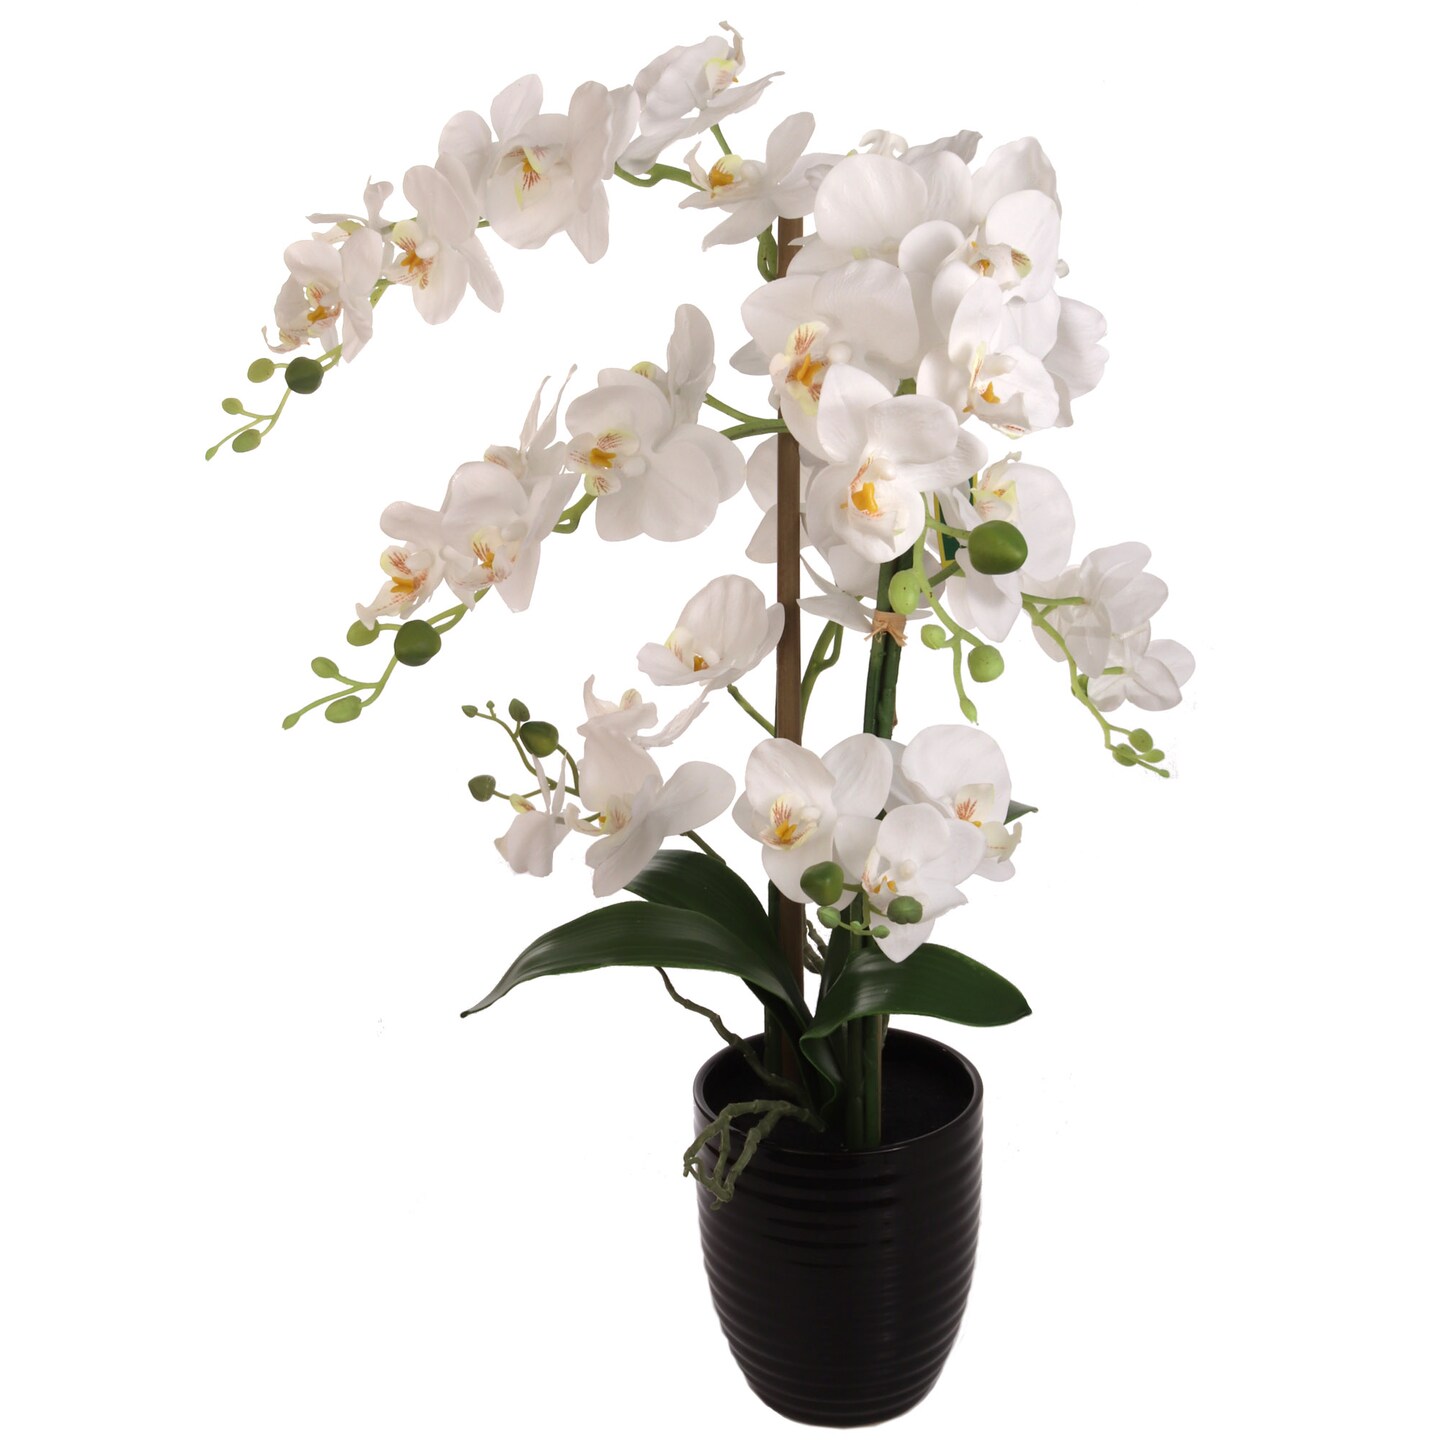 White Phalaenopsis Orchid Flowers in Black Ceramic Vase by Floral Home&#xAE;